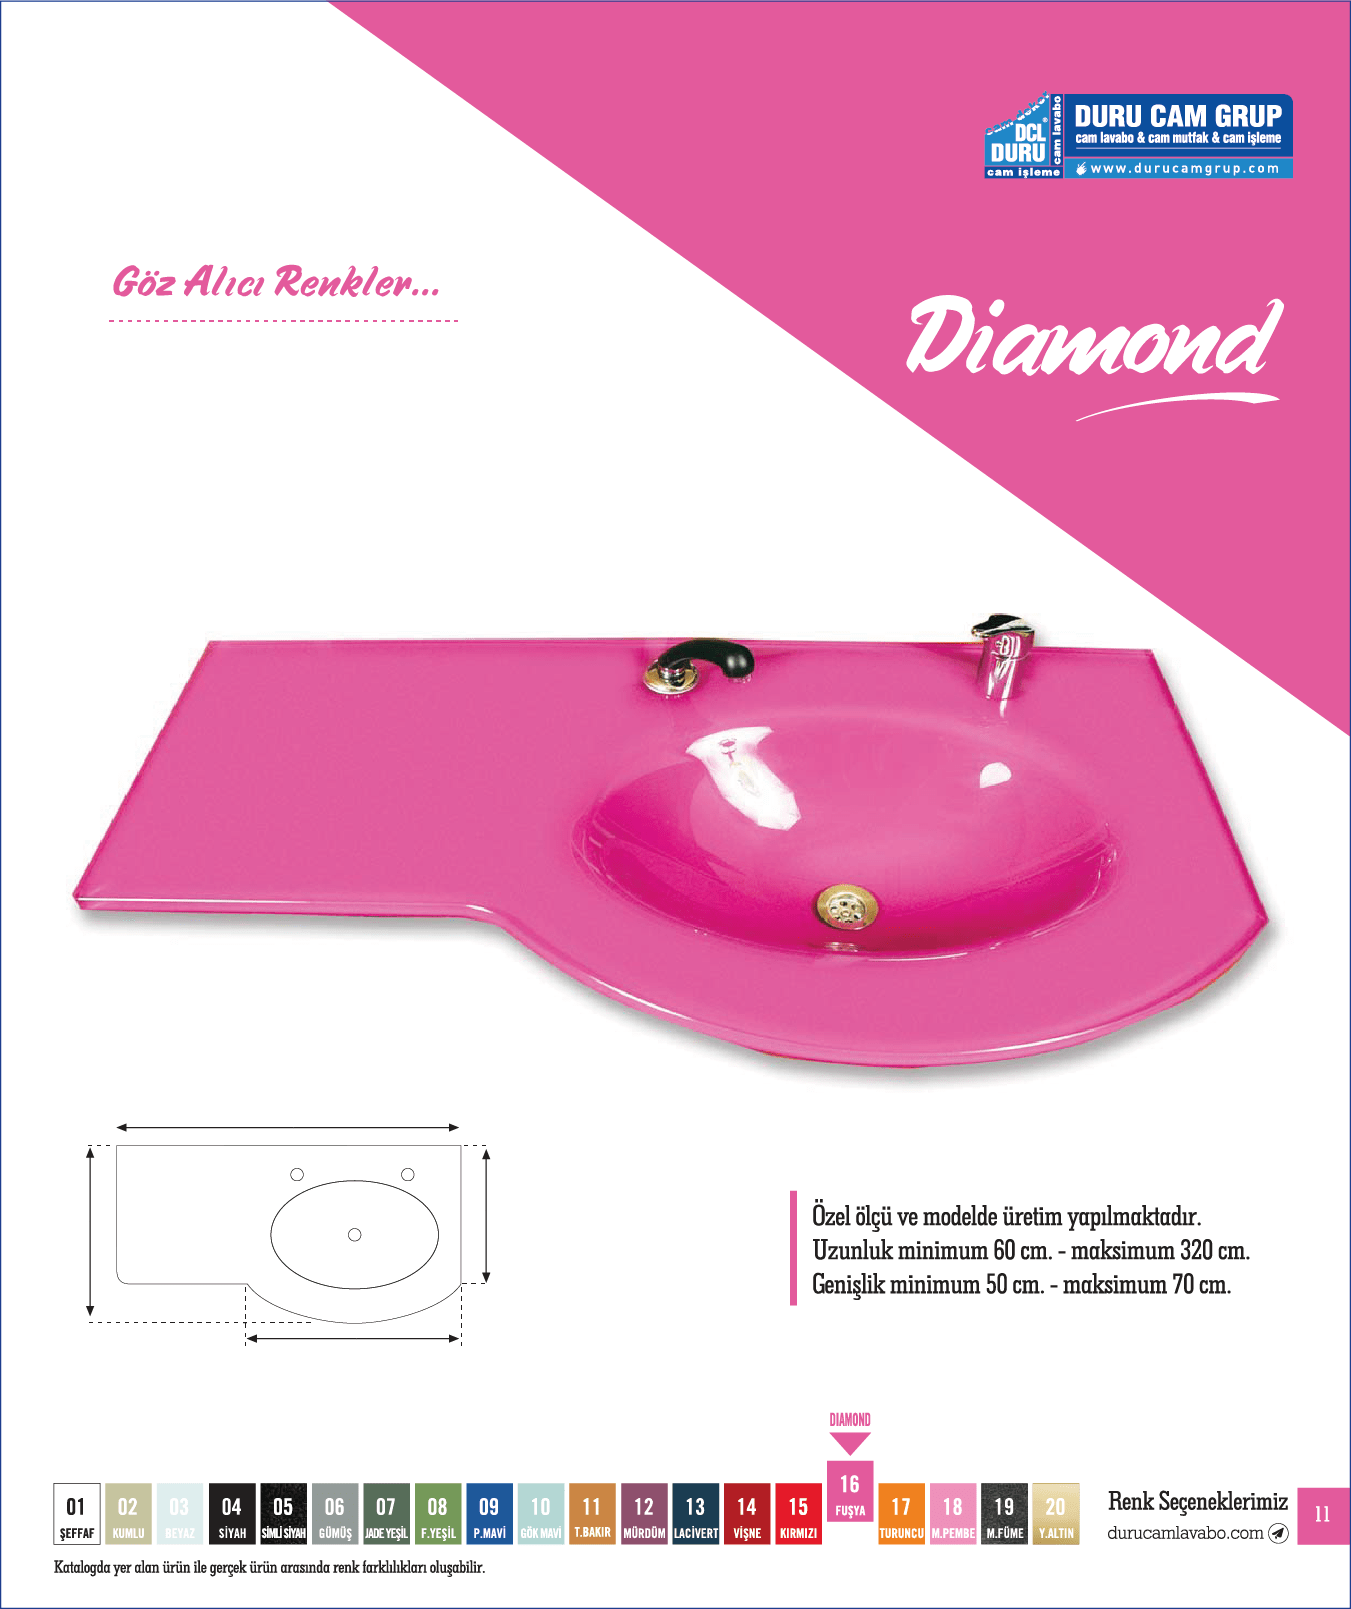 Diamond Model